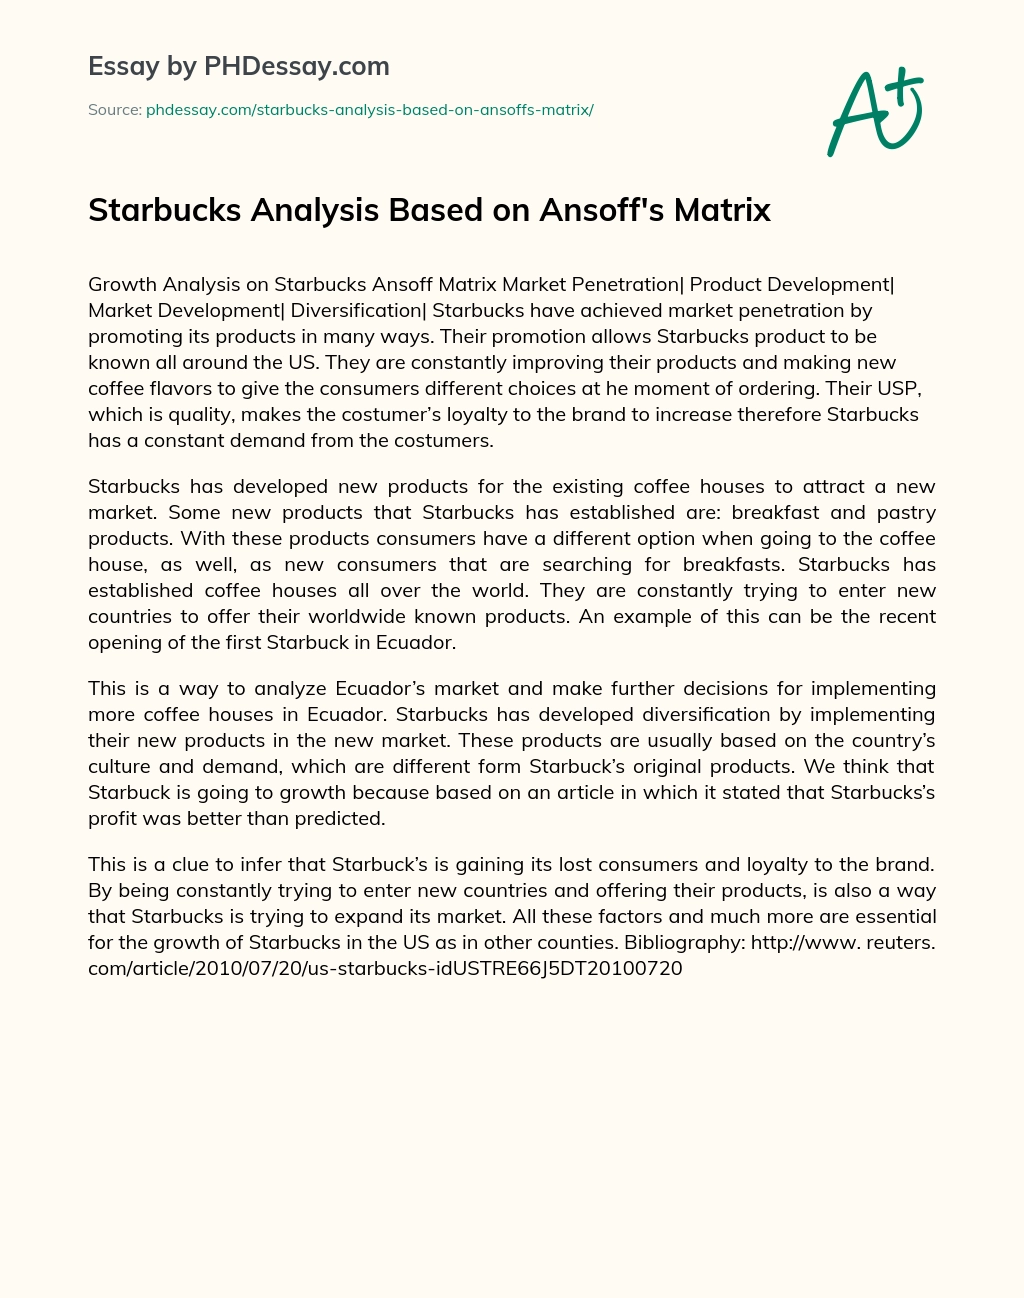 Starbucks Analysis Based on Ansoff’s Matrix essay